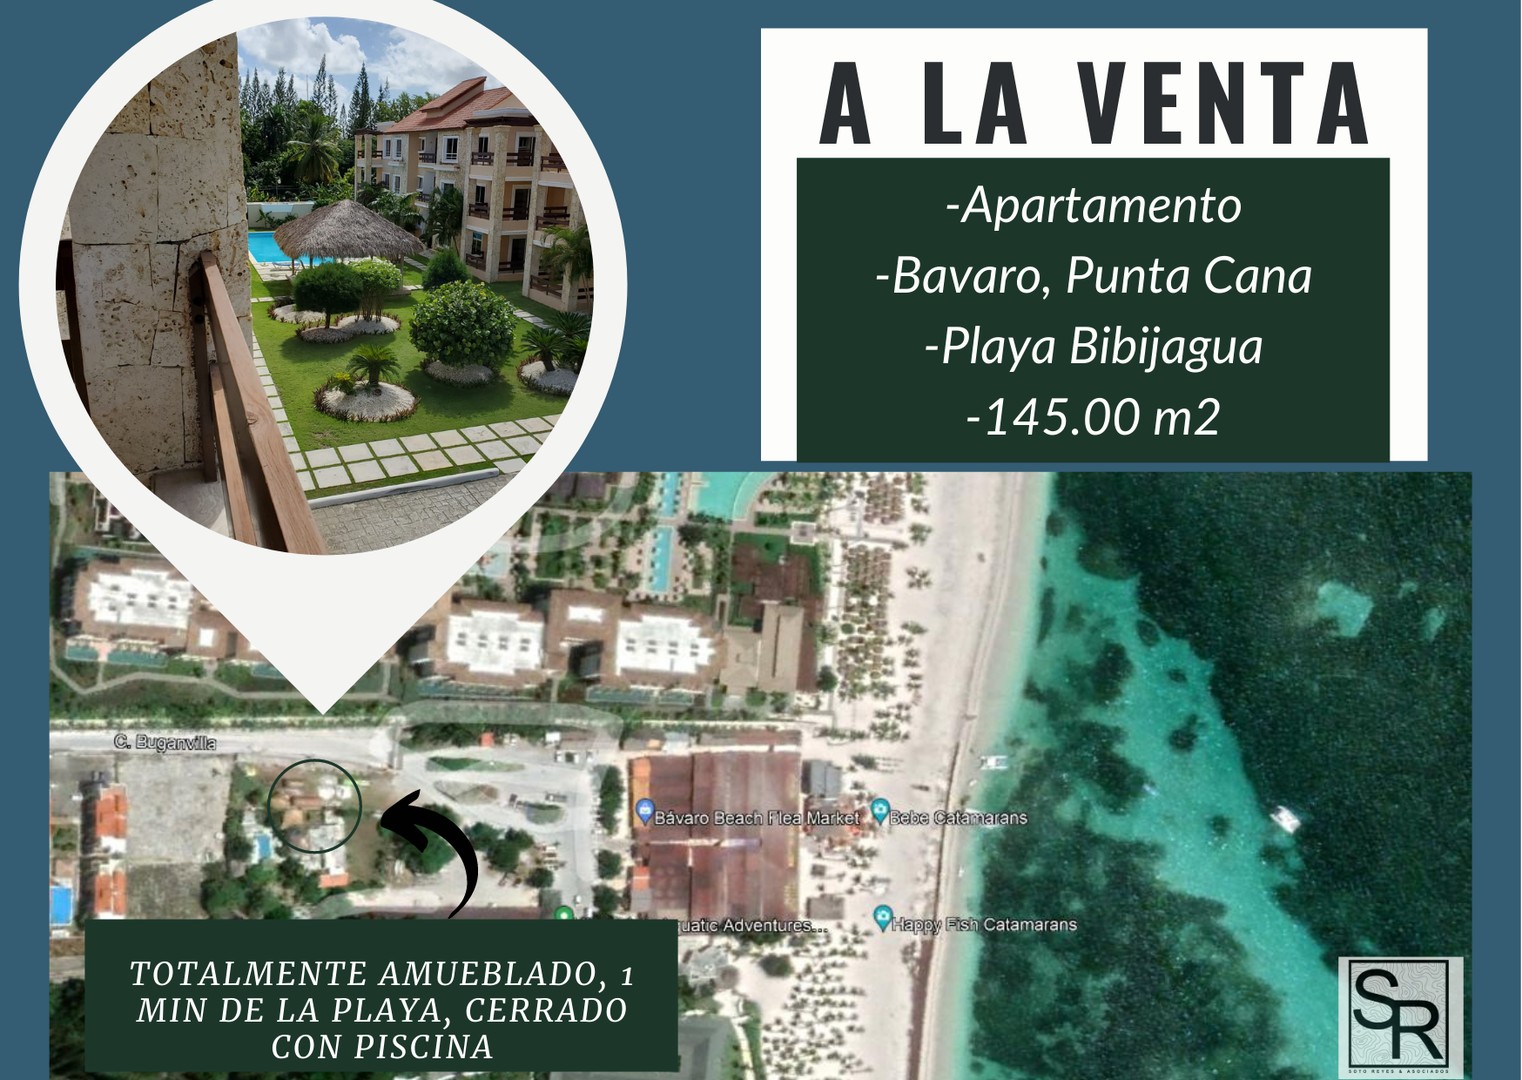 apartamentos - Apartamento en venta, Bavaro, Punta Cana (BIBIJAGUA) 1 min de la playa.